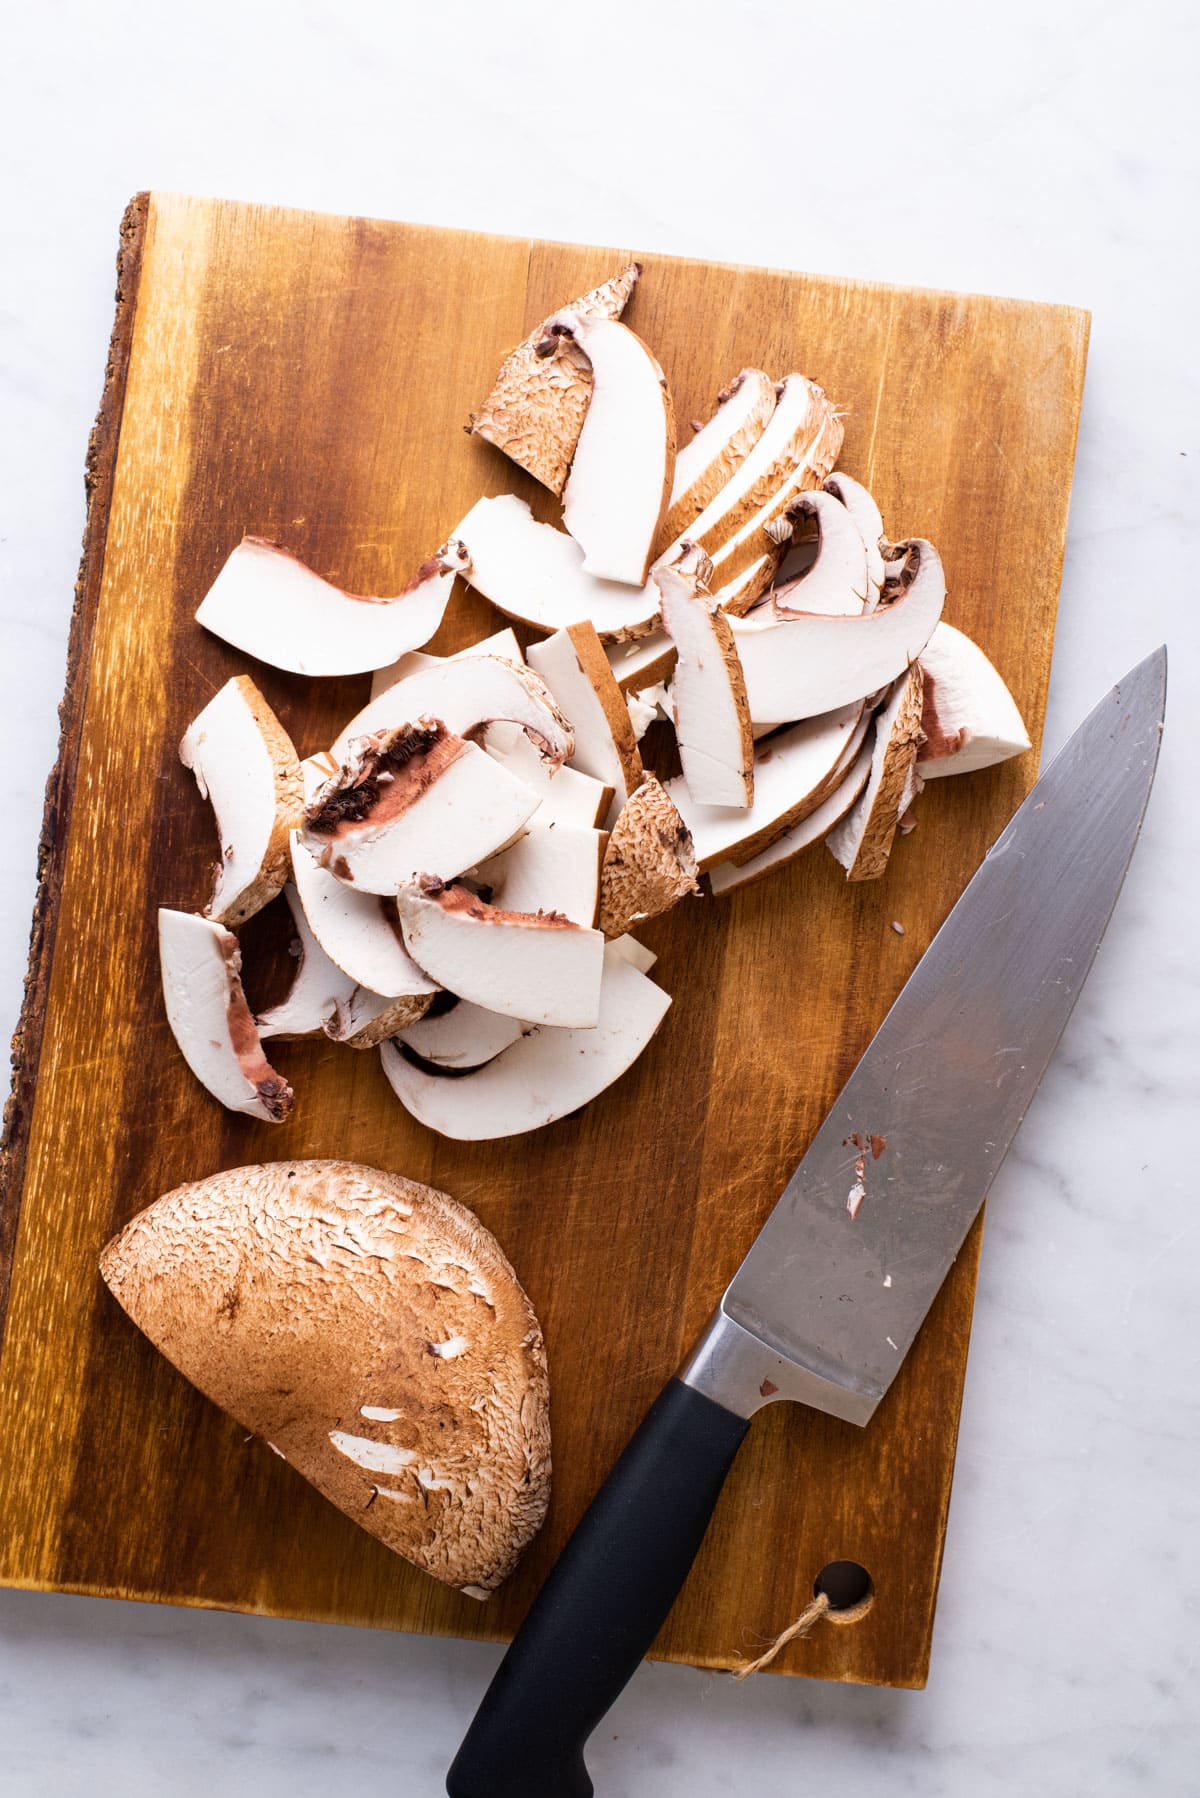 Sliced portobello mushrooms on wooden cutting board.